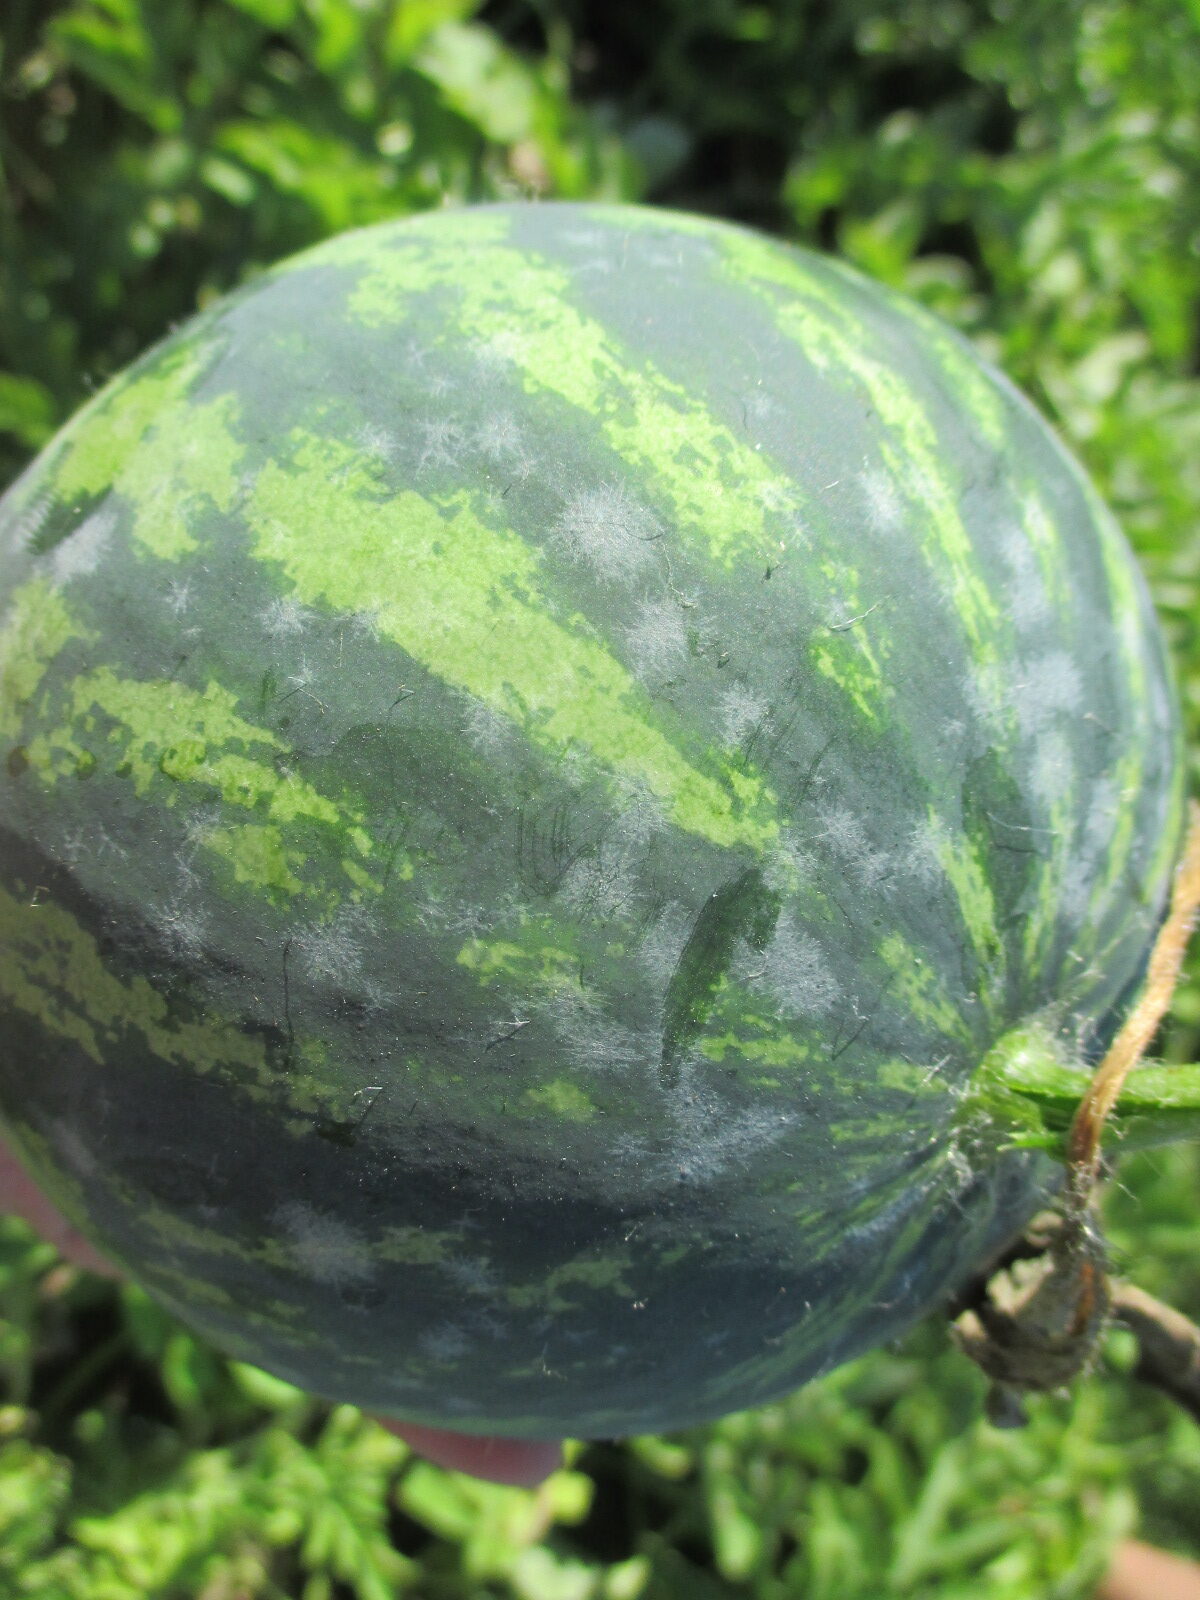 Figure 3. Powdery mildew of watermelon fruit. (Photo by Wenjing Guan.)